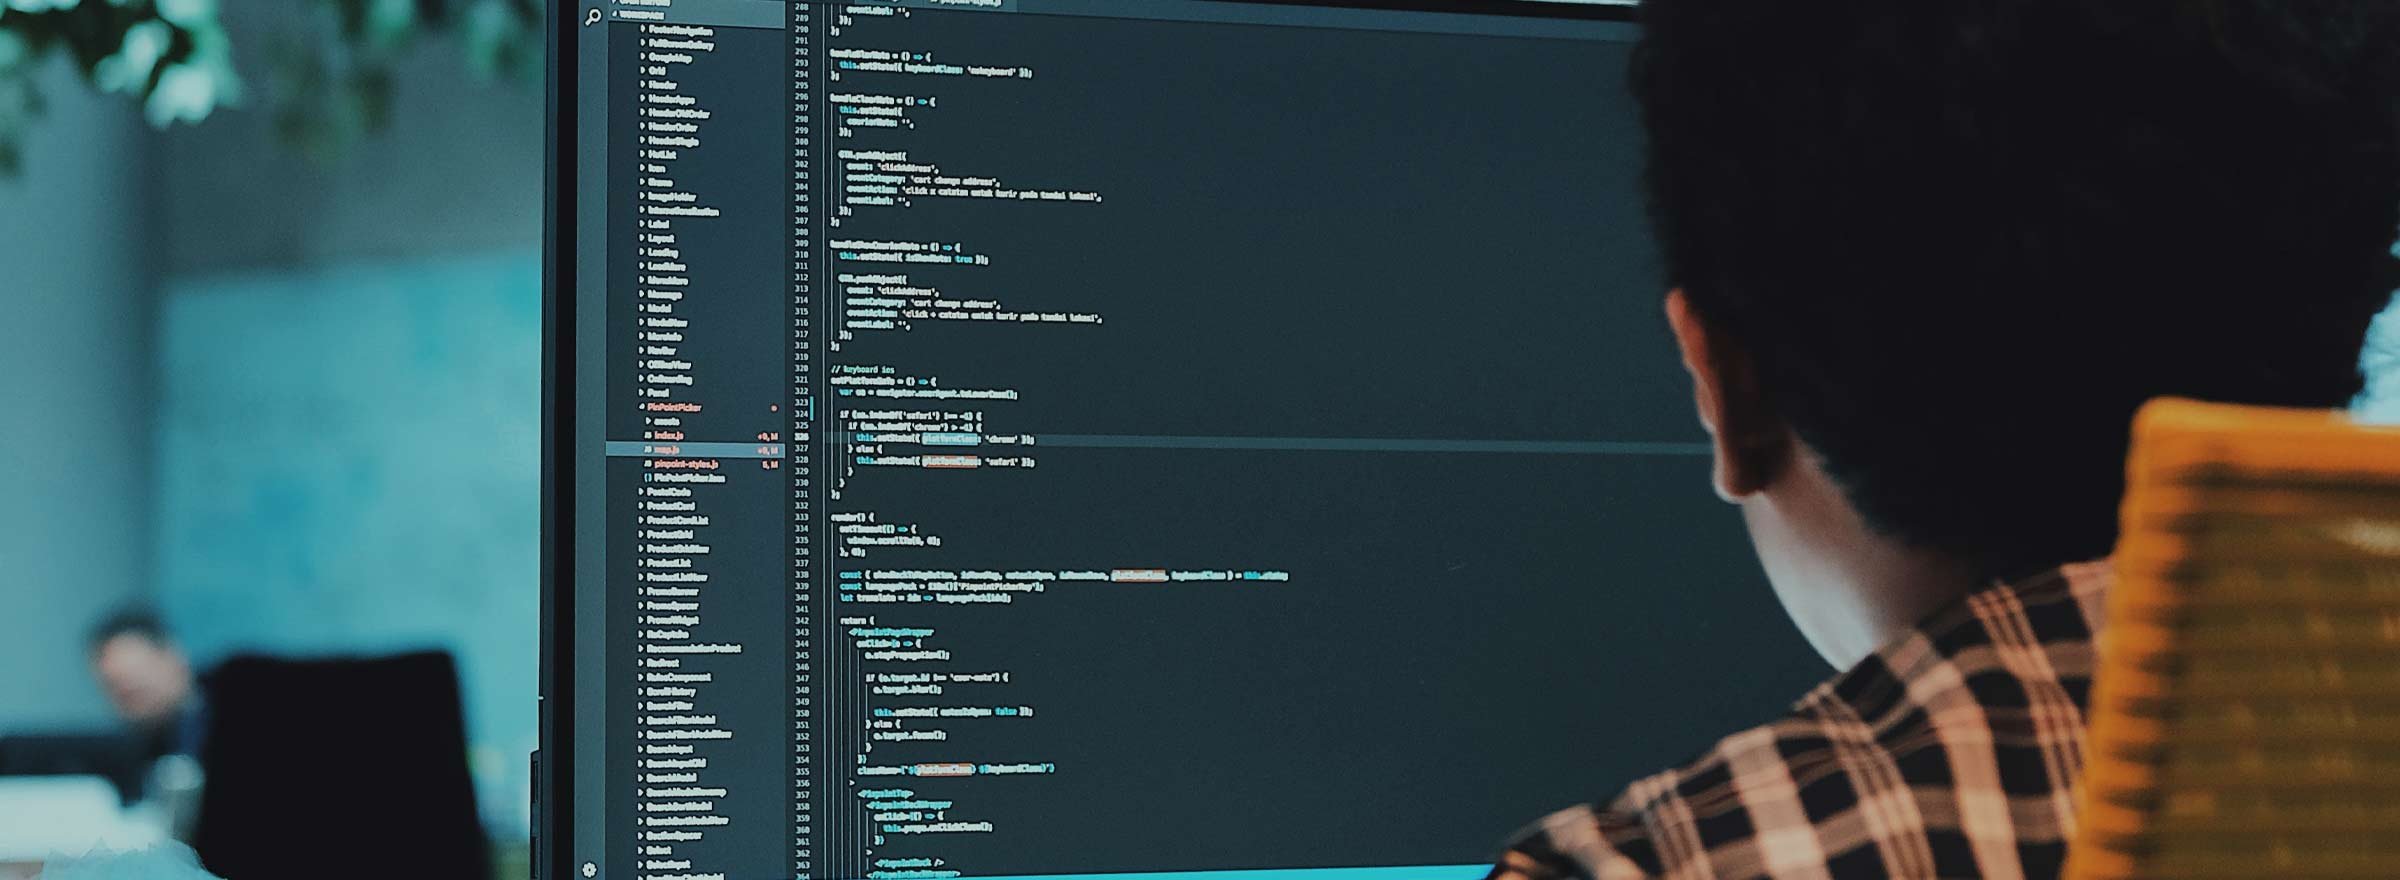 man looking at a screen of computer code